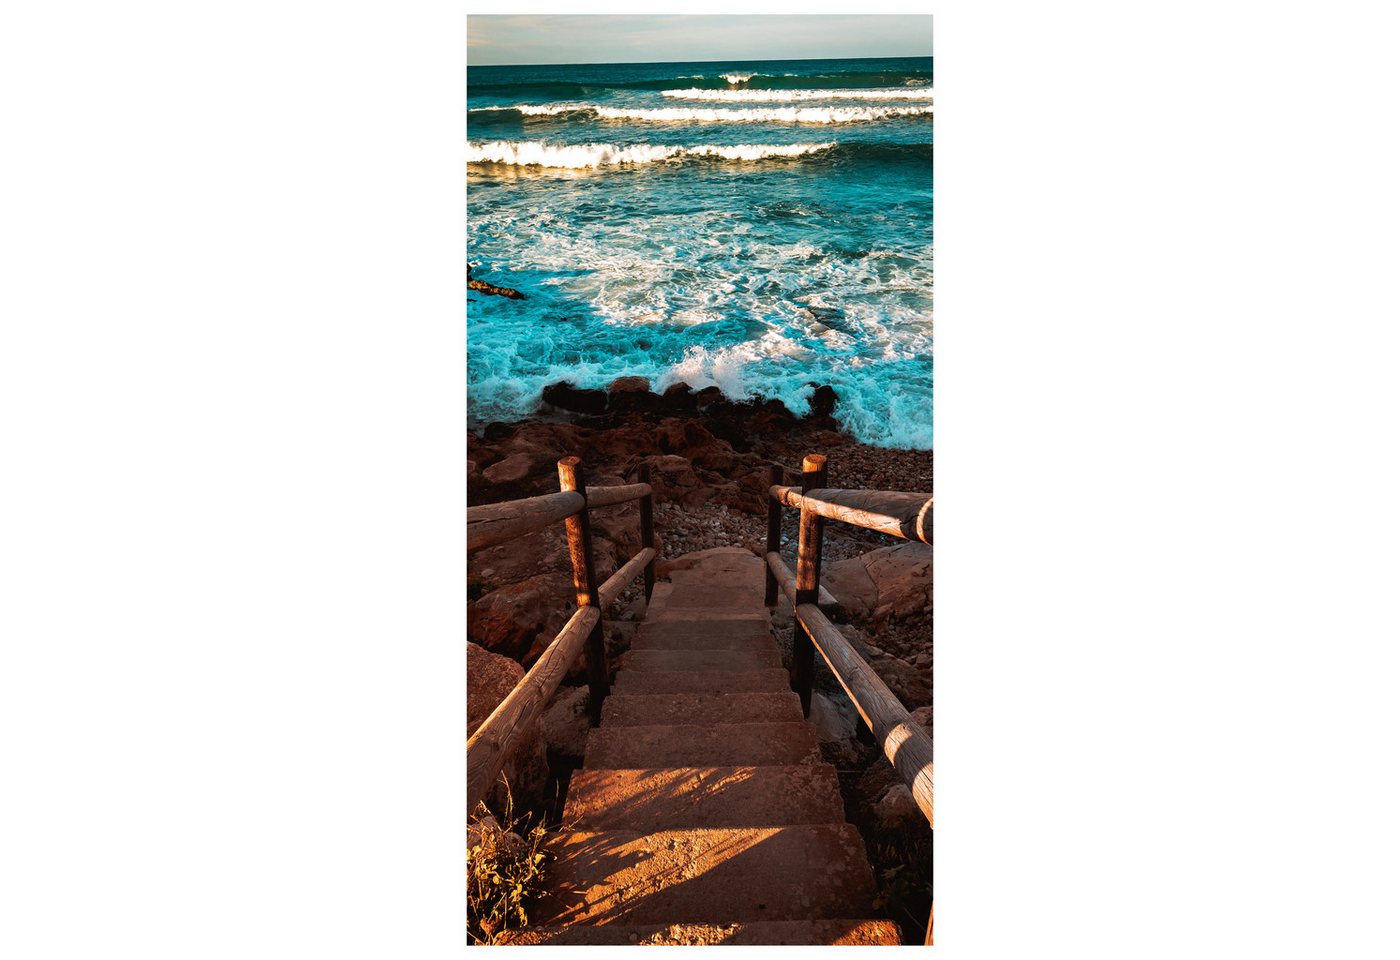 wandmotiv24 Türtapete Treppe zum Strand, Meer, Wellen, Wasser, glatt, Fototapete, Wandtapete, Motivtapete, matt, selbstklebende Vliestapete von wandmotiv24